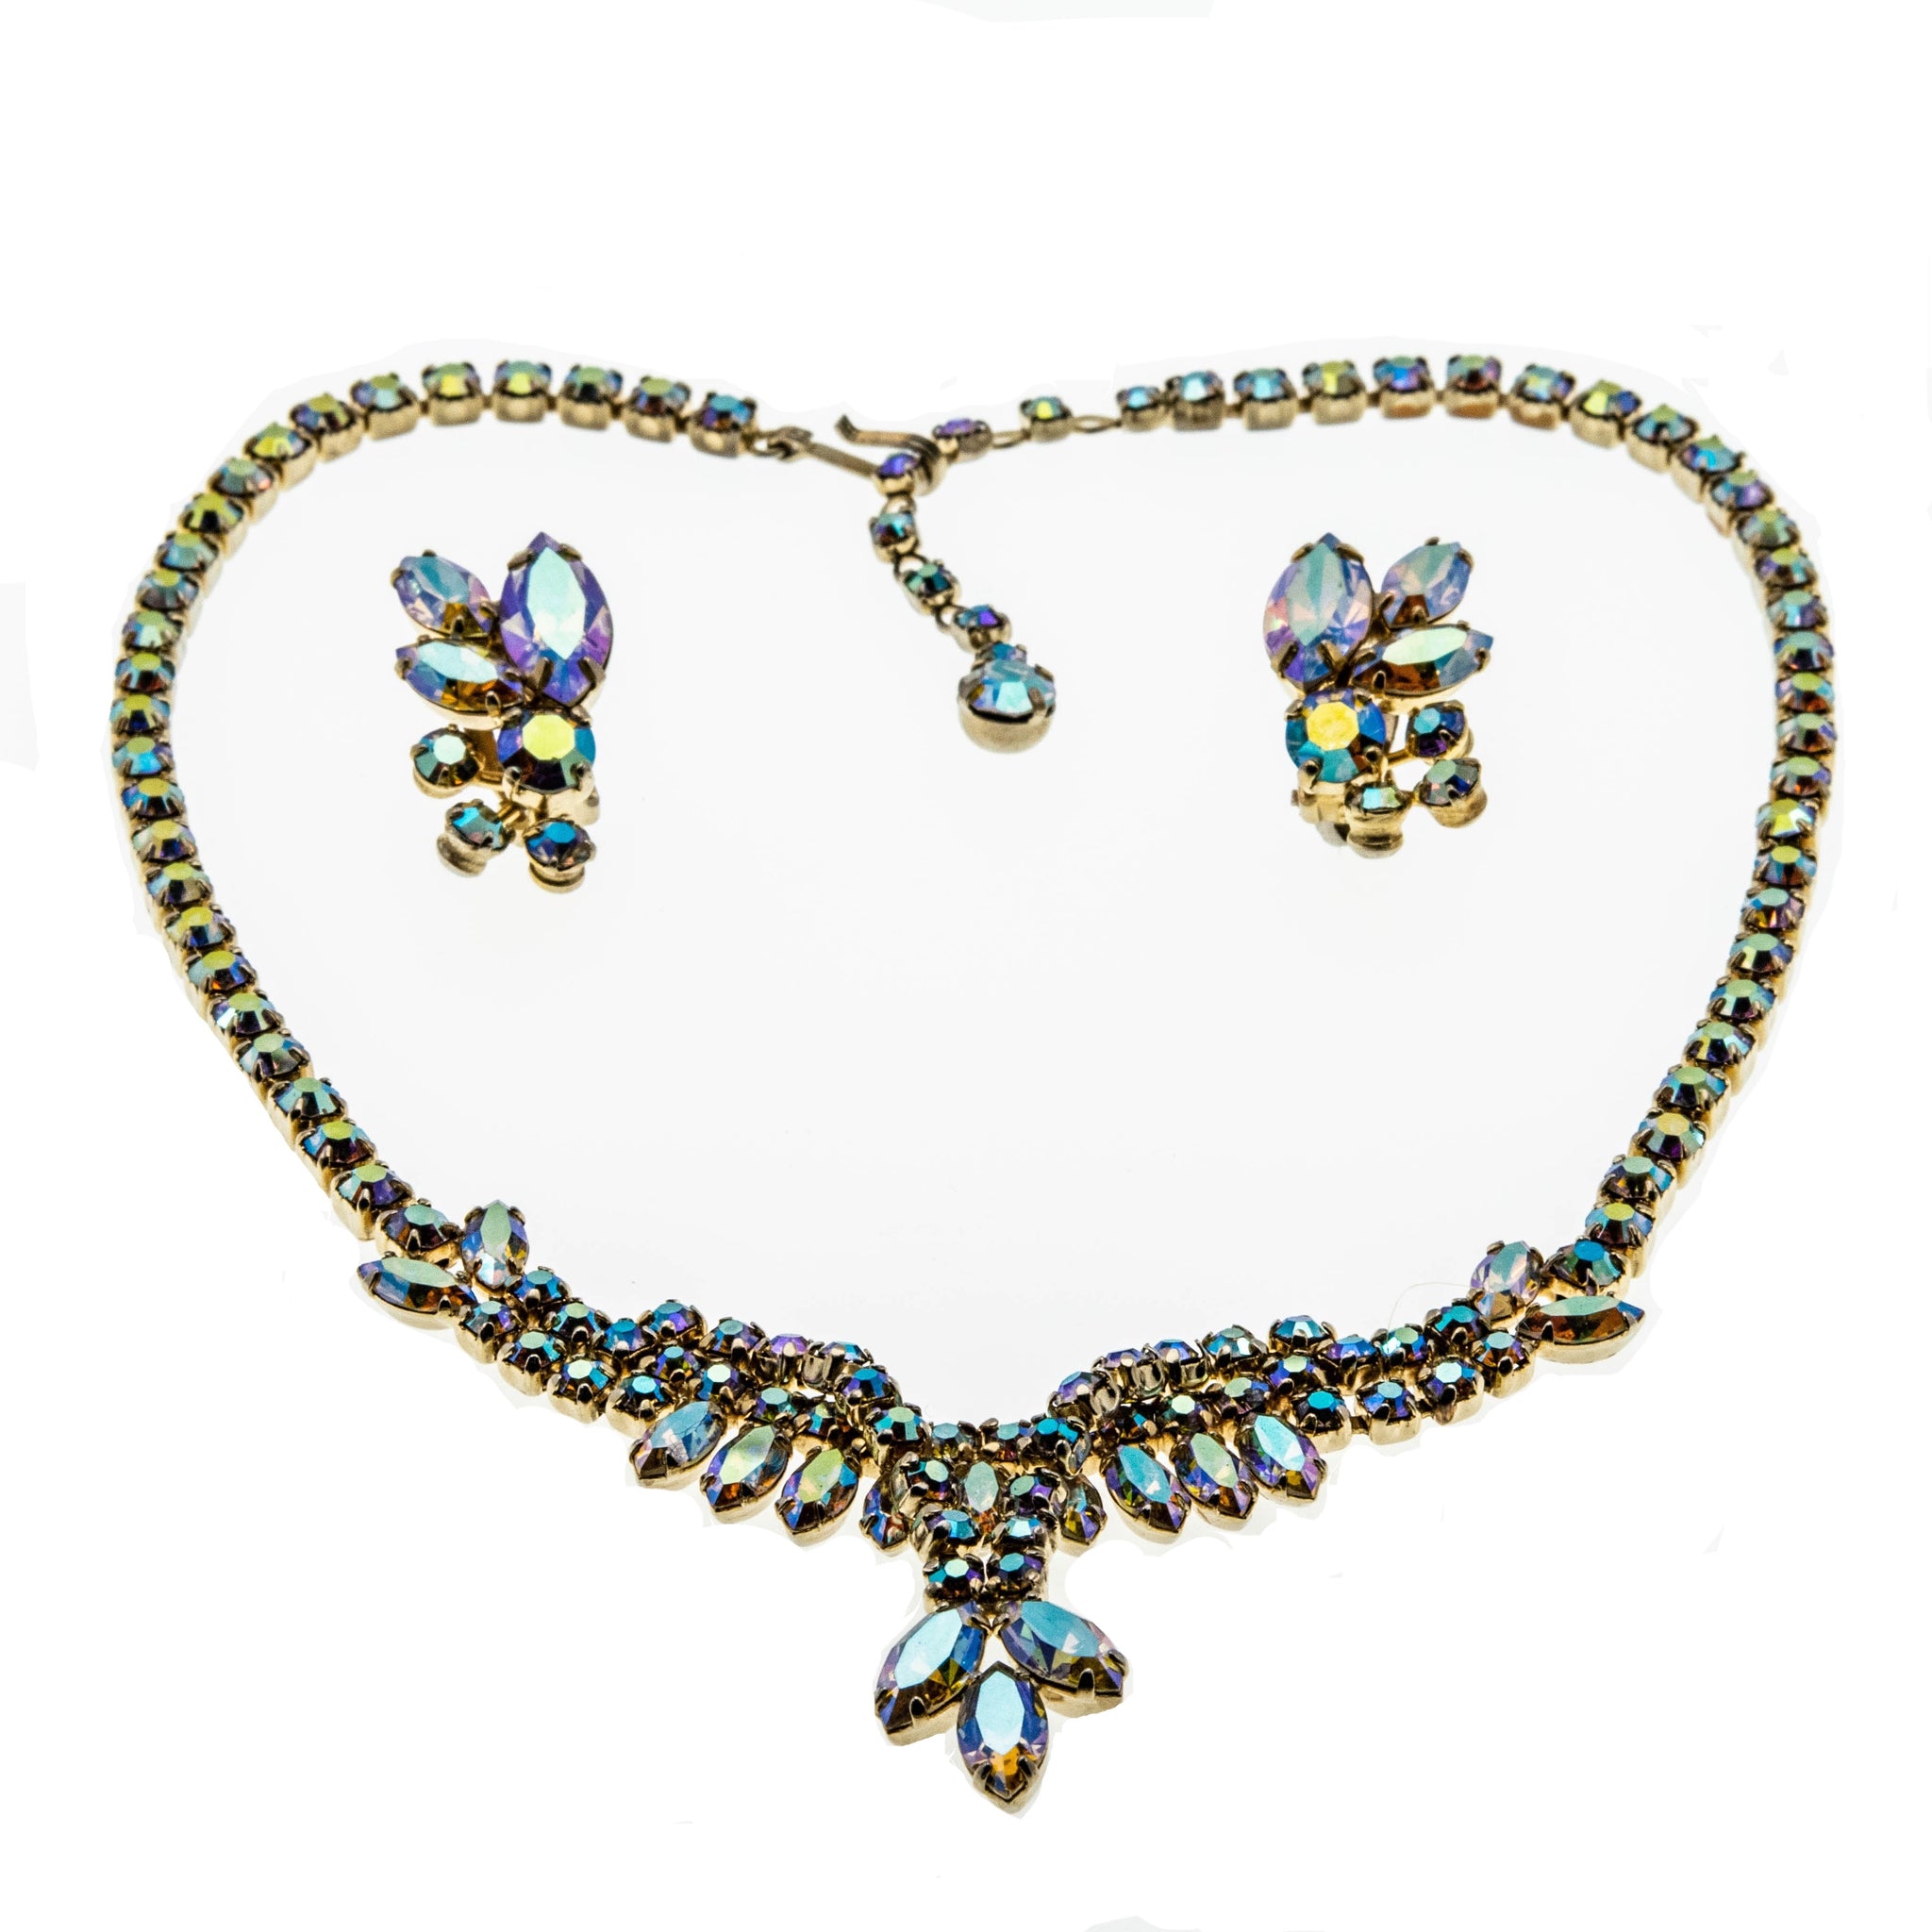 Antique vintage rhinestone Tassel necklace 18” Long 12/20 | eBay